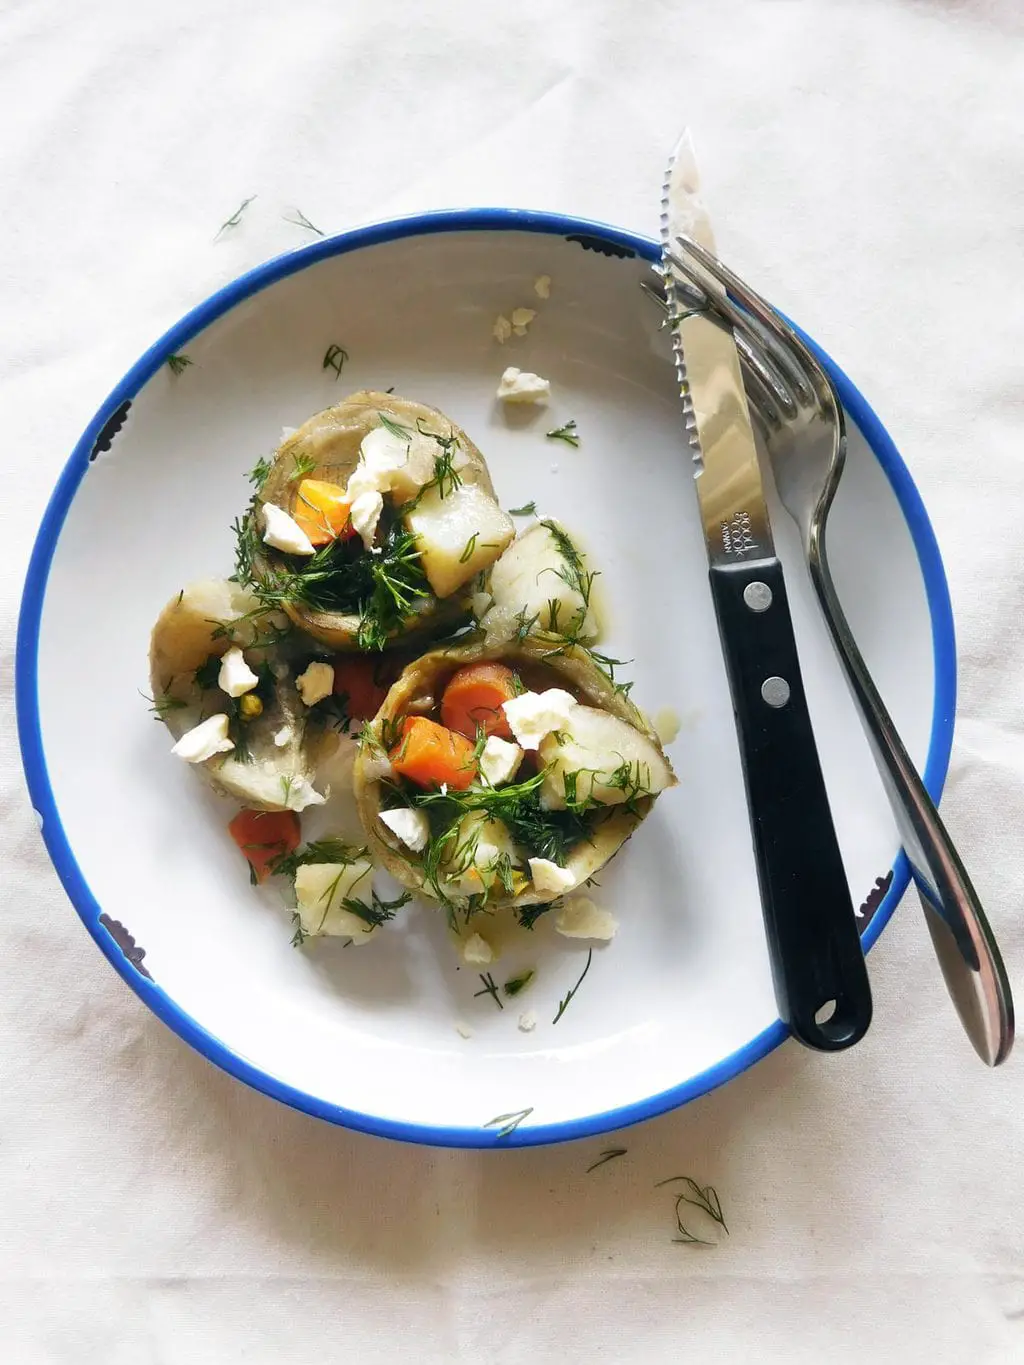 Marinated artichoke hearts recipe via @thouswellblog